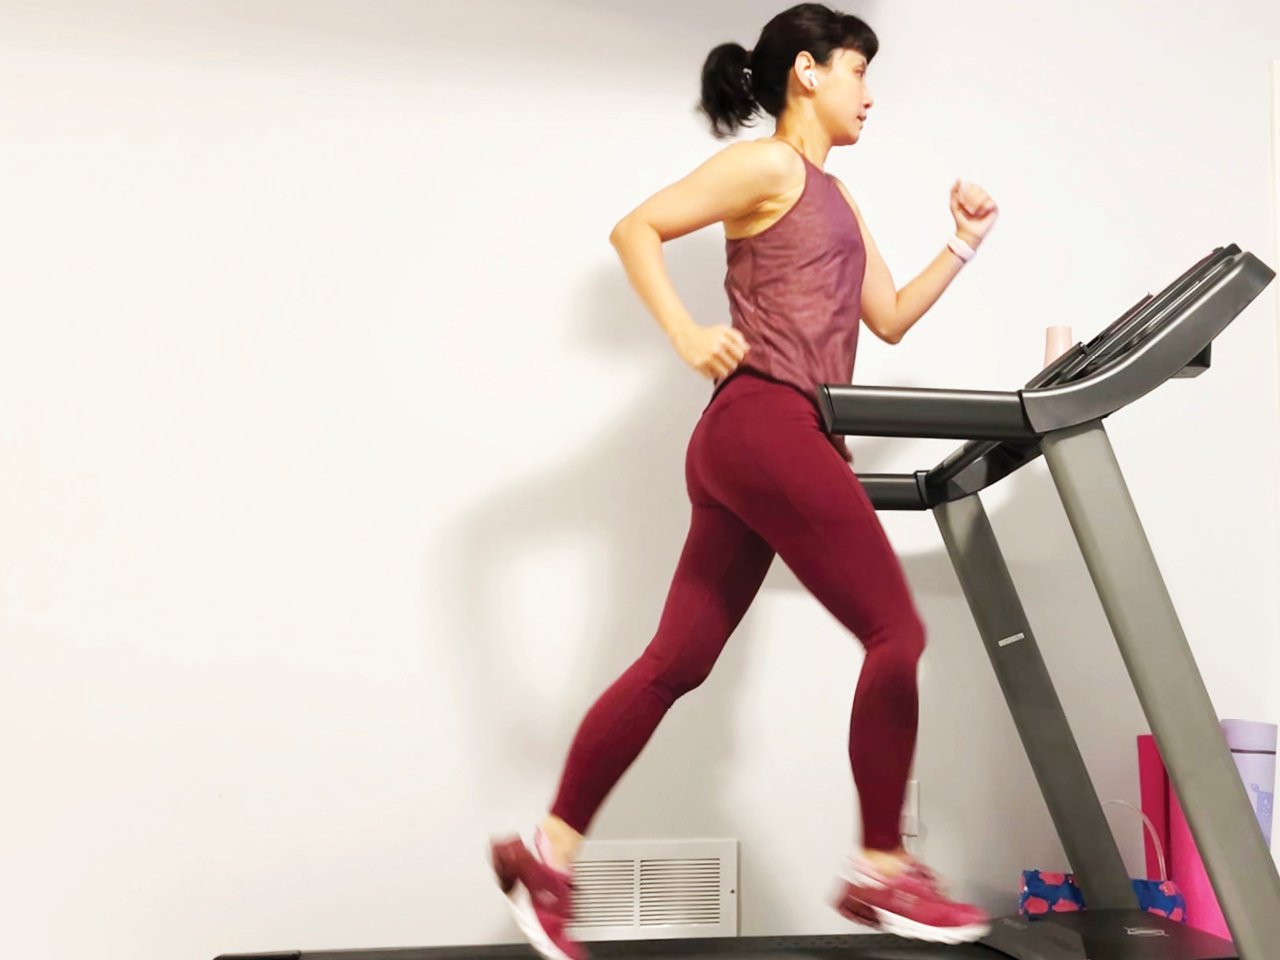 A runner on a treadmill